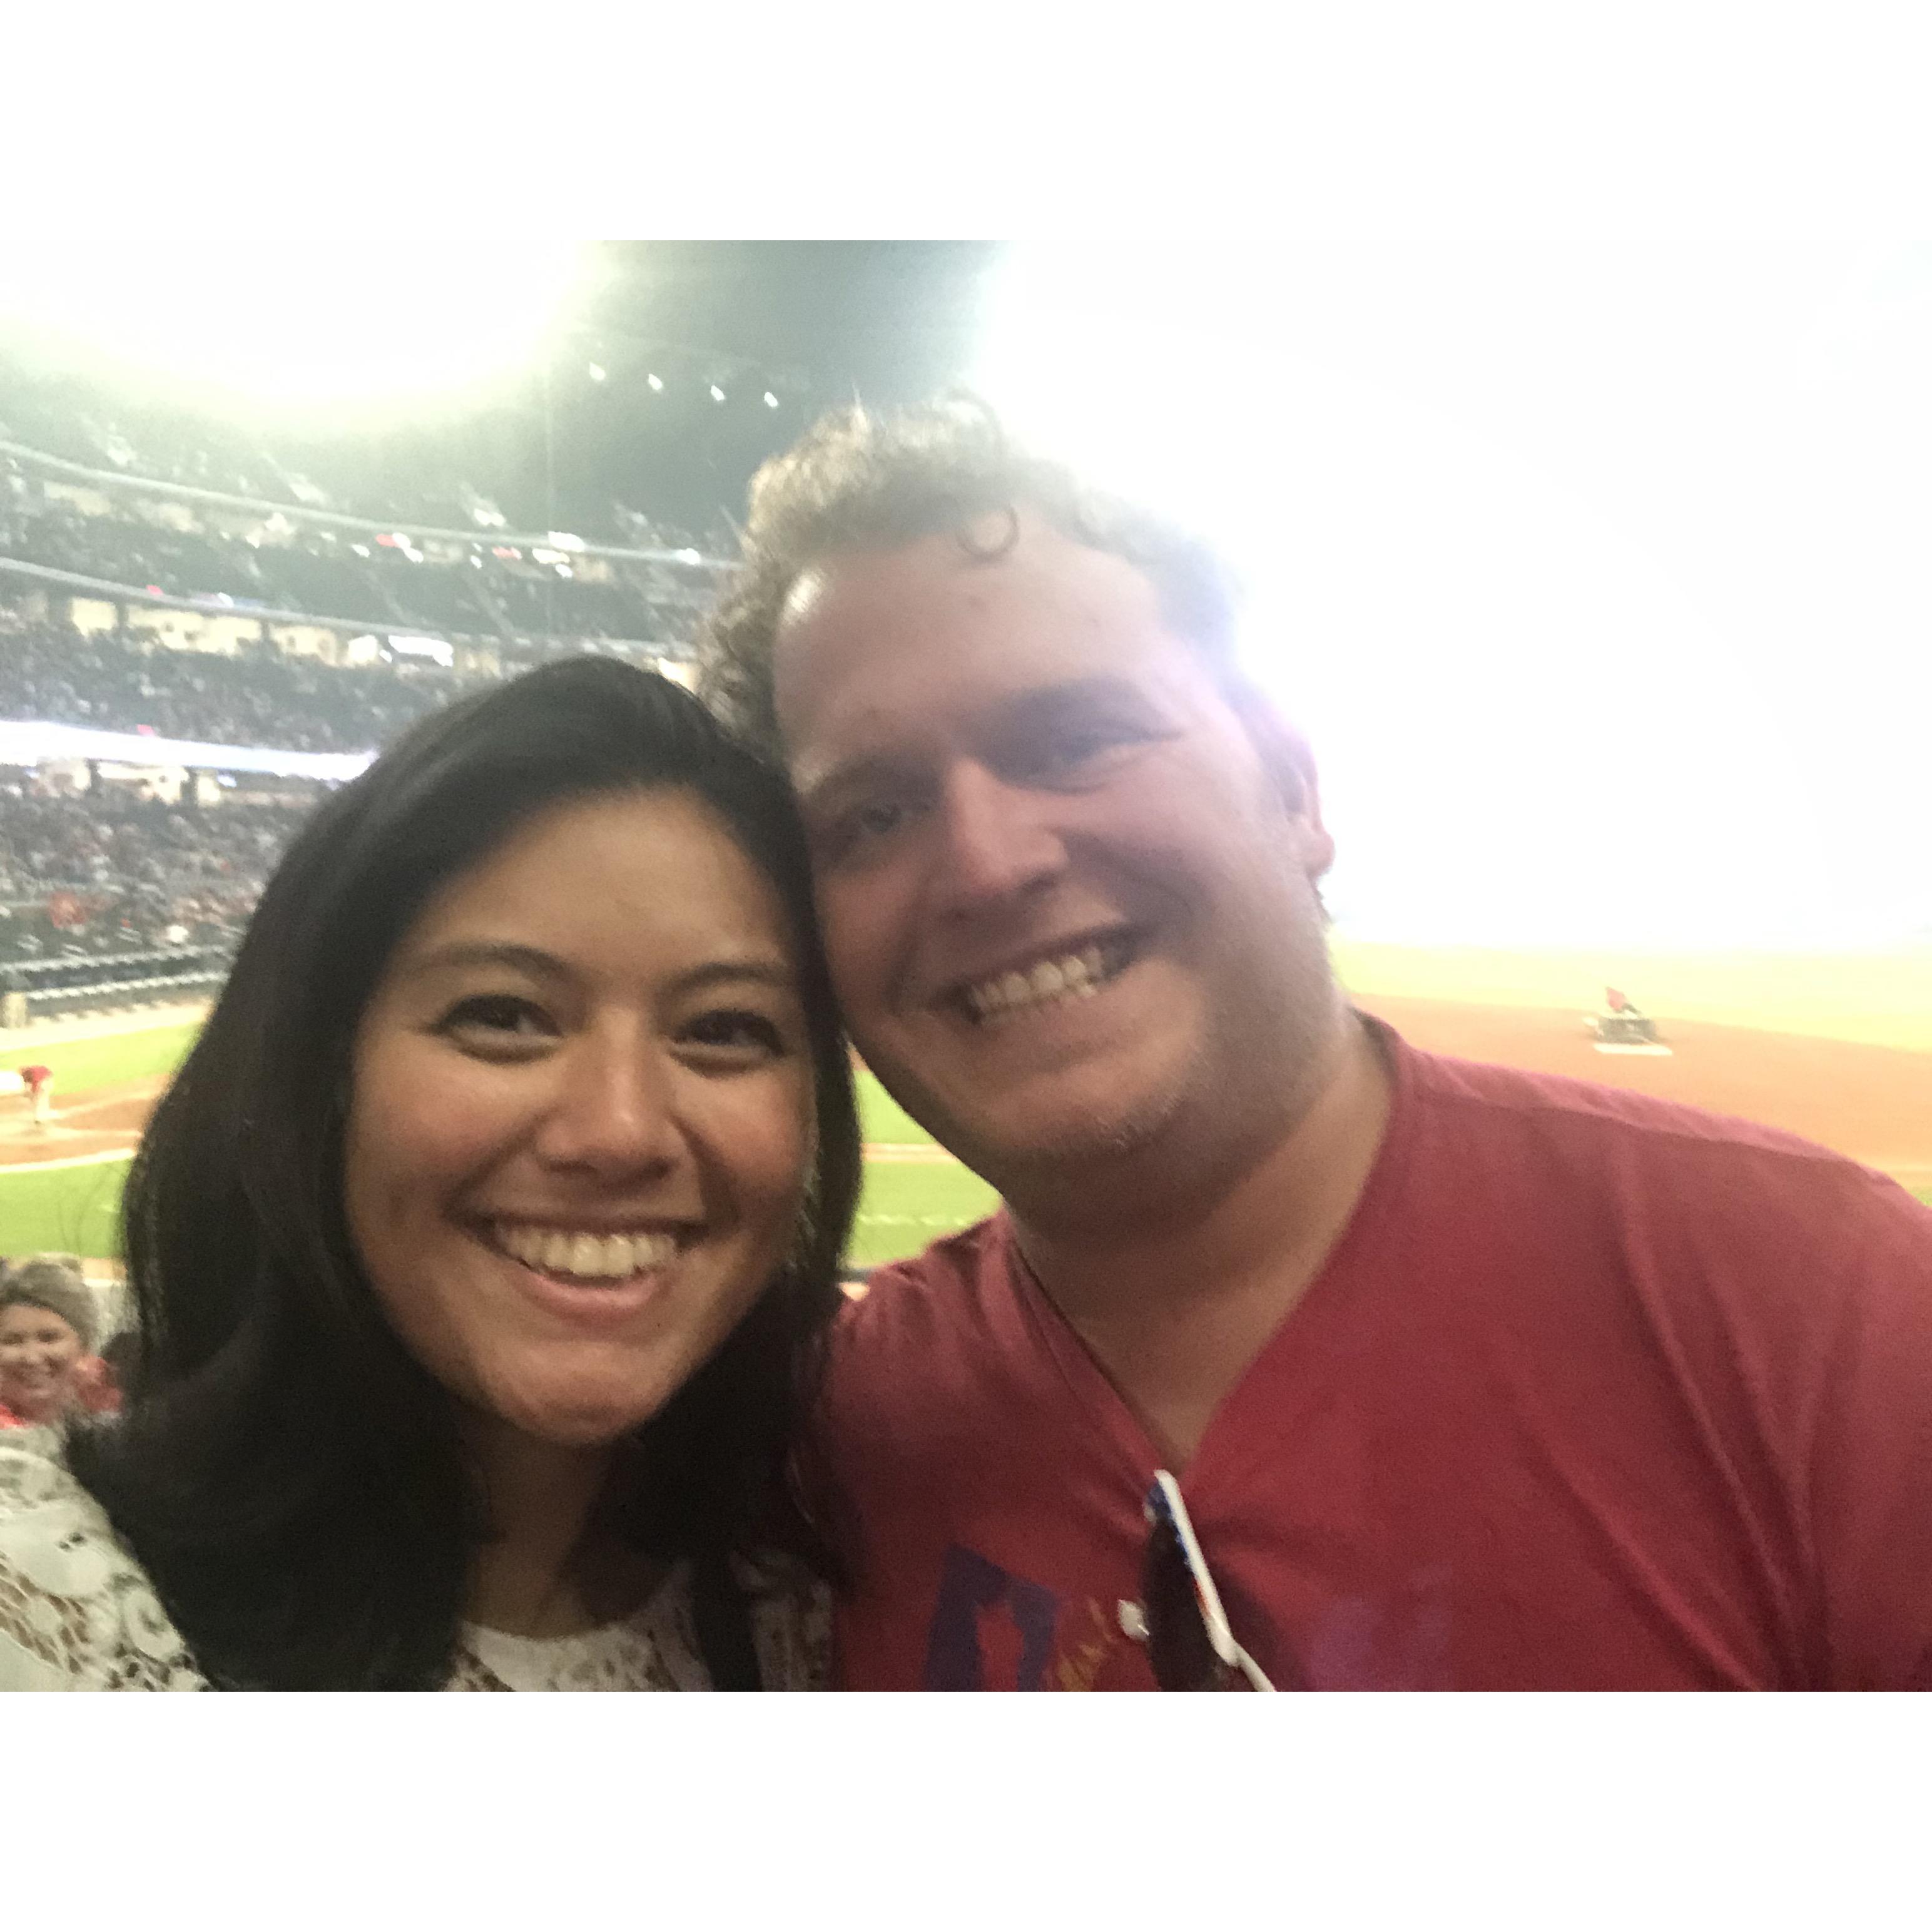 Elena's 28th Birthday (2021) - Braves game - Braves won - then they won the World Series